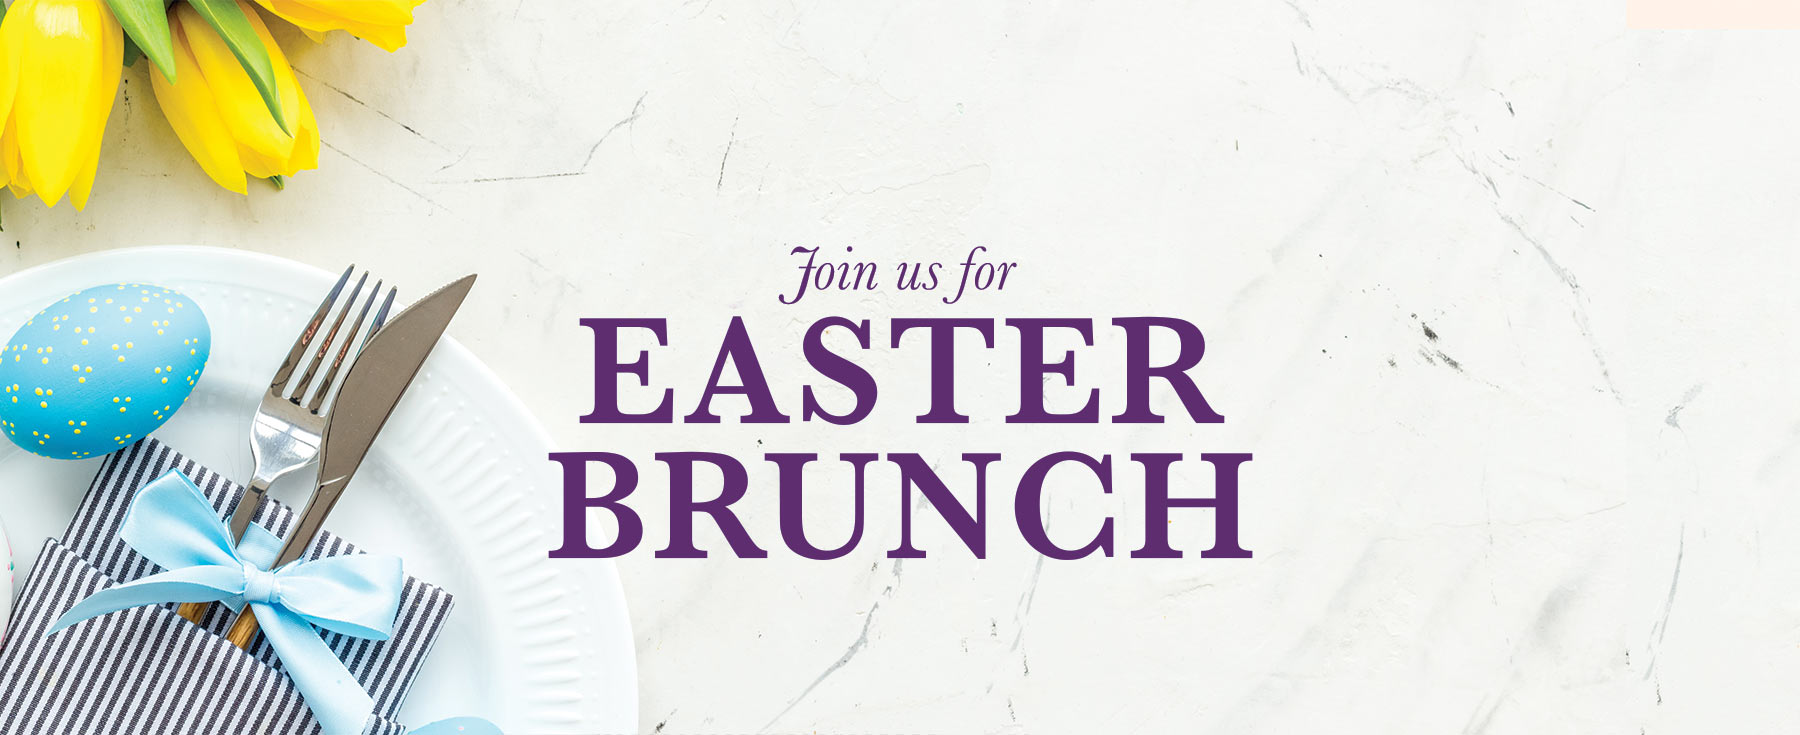 Easter Brunch at The Italian Community Center | Easter Brunch Buffet in ...